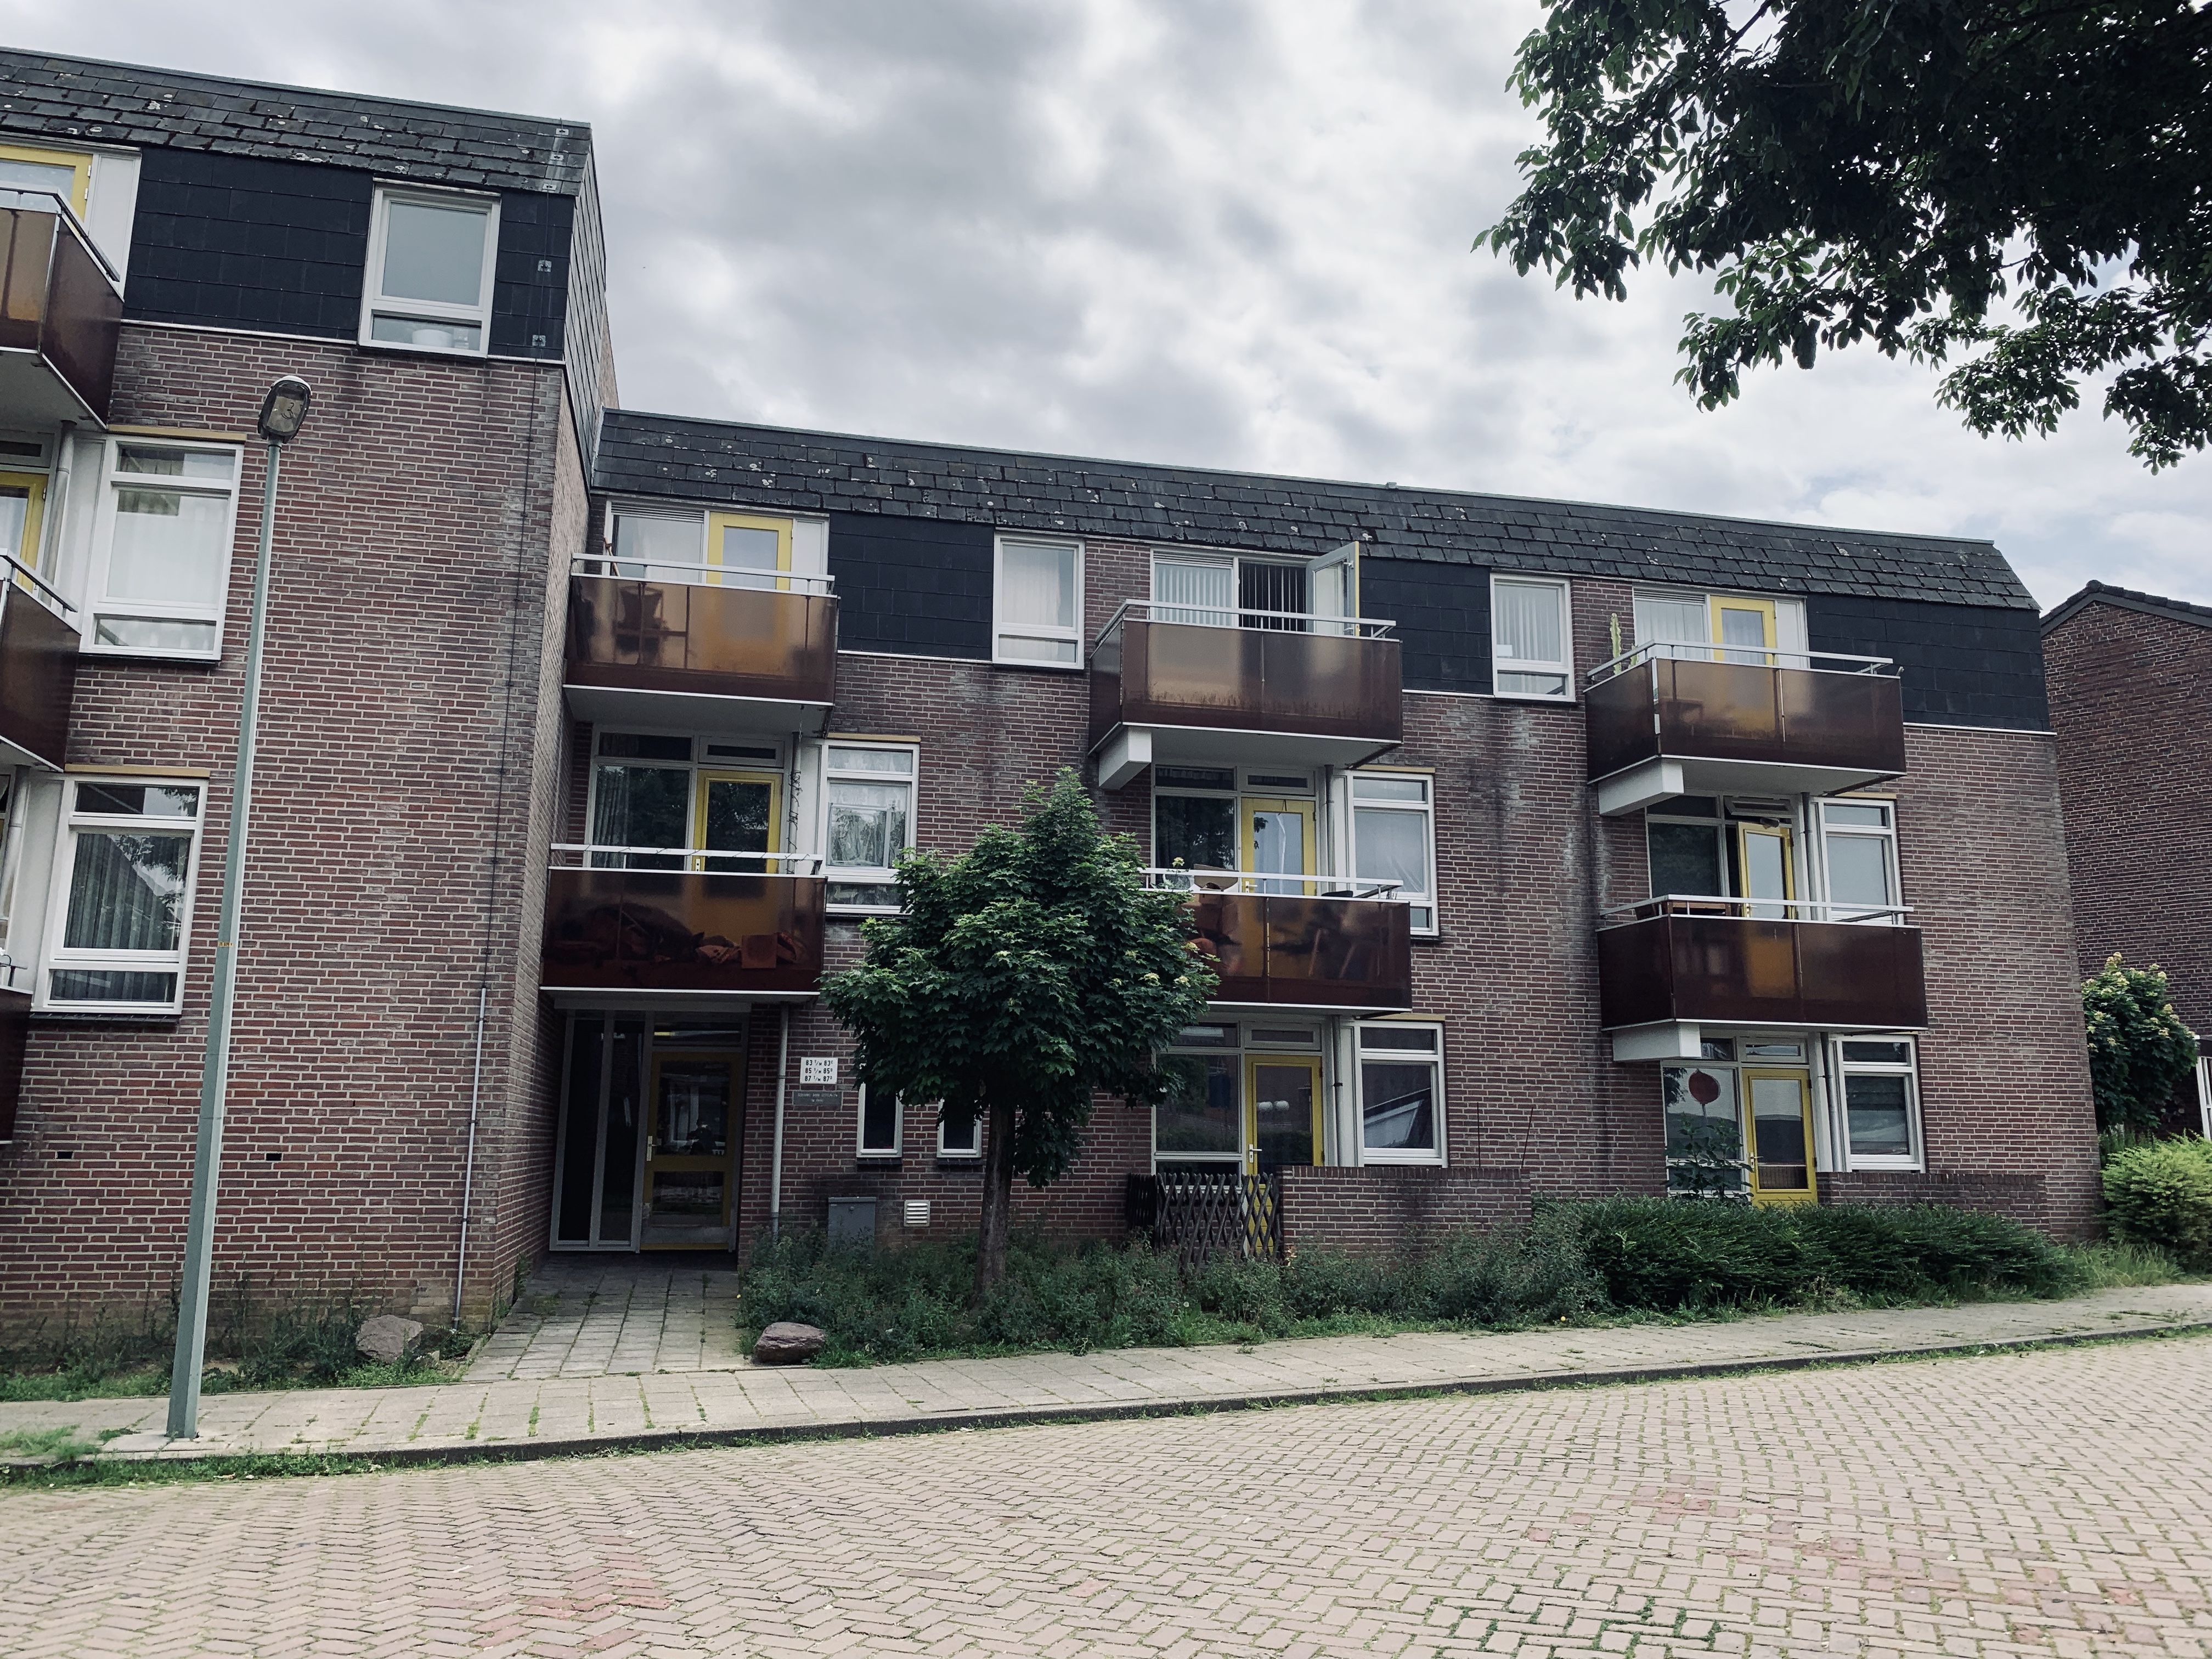 Burgemeester Slanghenstraat 83A, 6433 AT Hoensbroek, Nederland